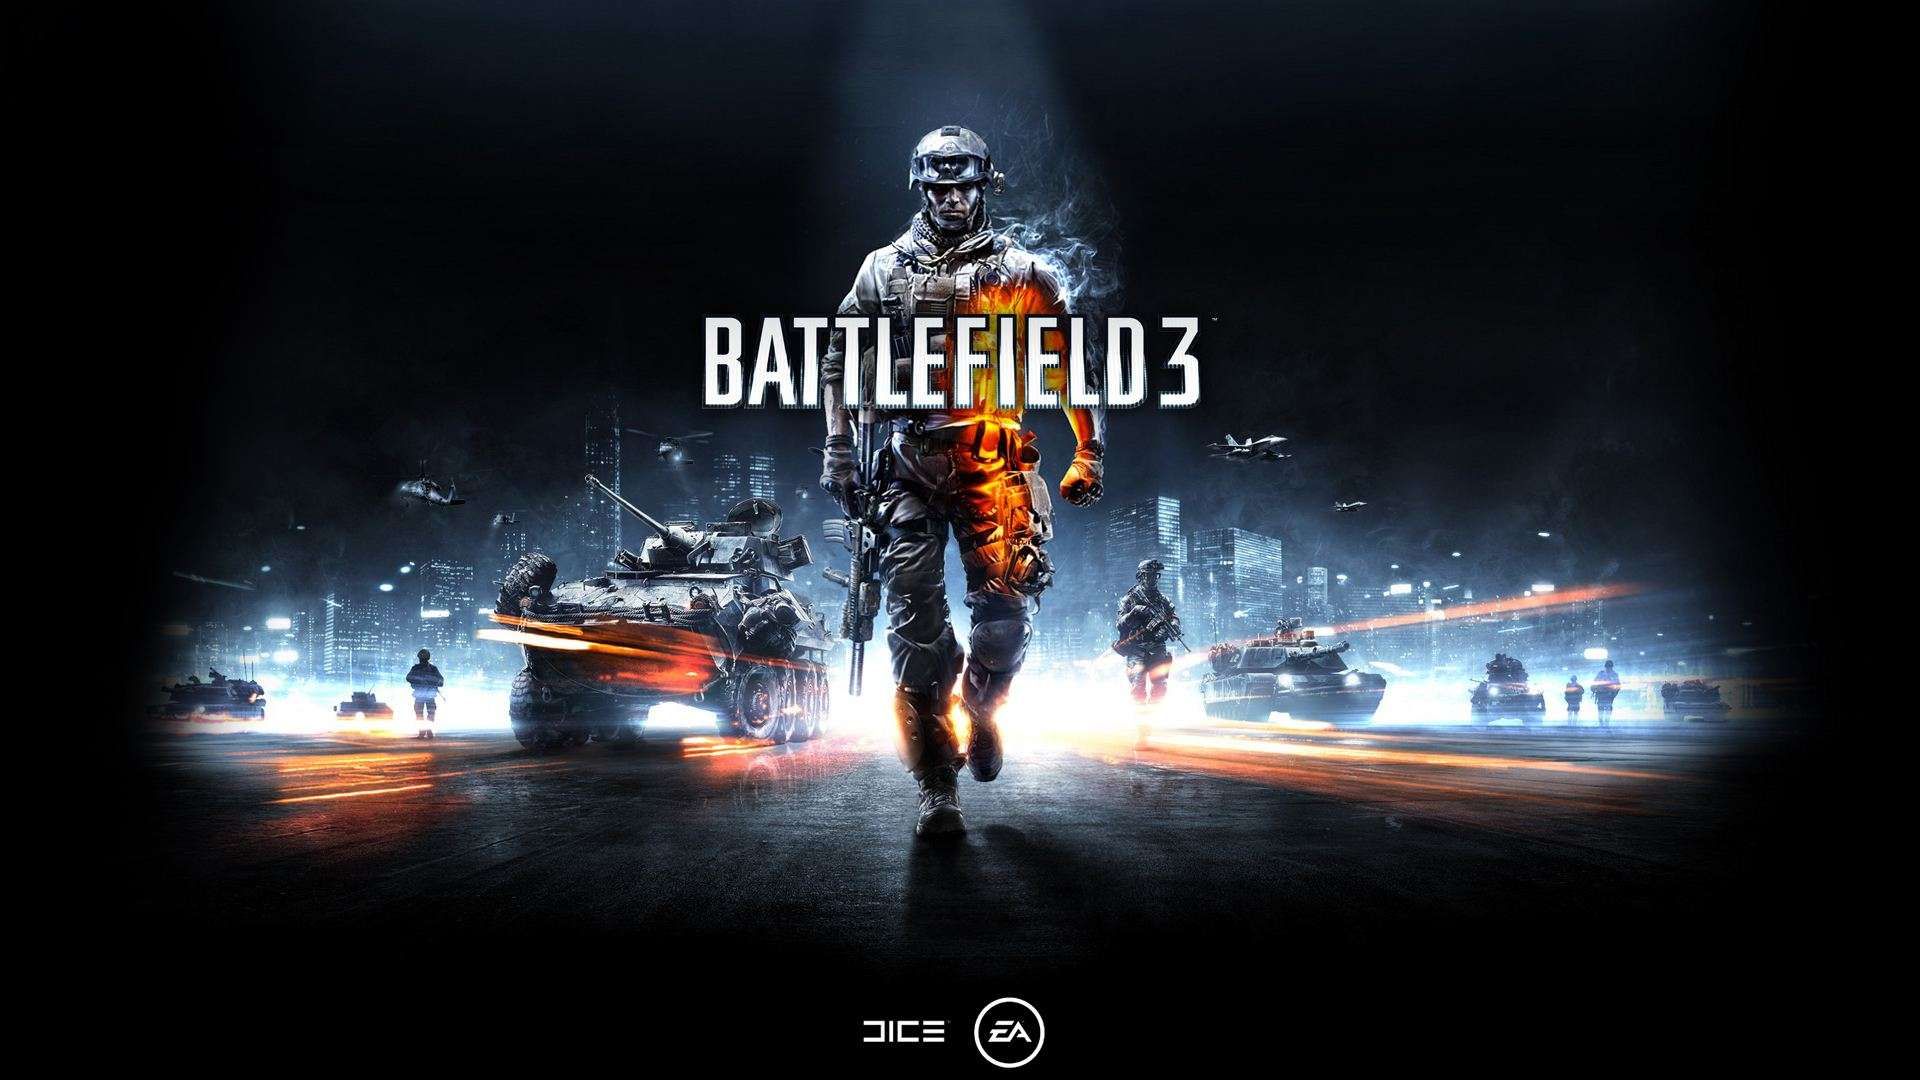 http://megagames.com/sites/default/files/game-content-images/Battlefield3wallpaper1.jpg